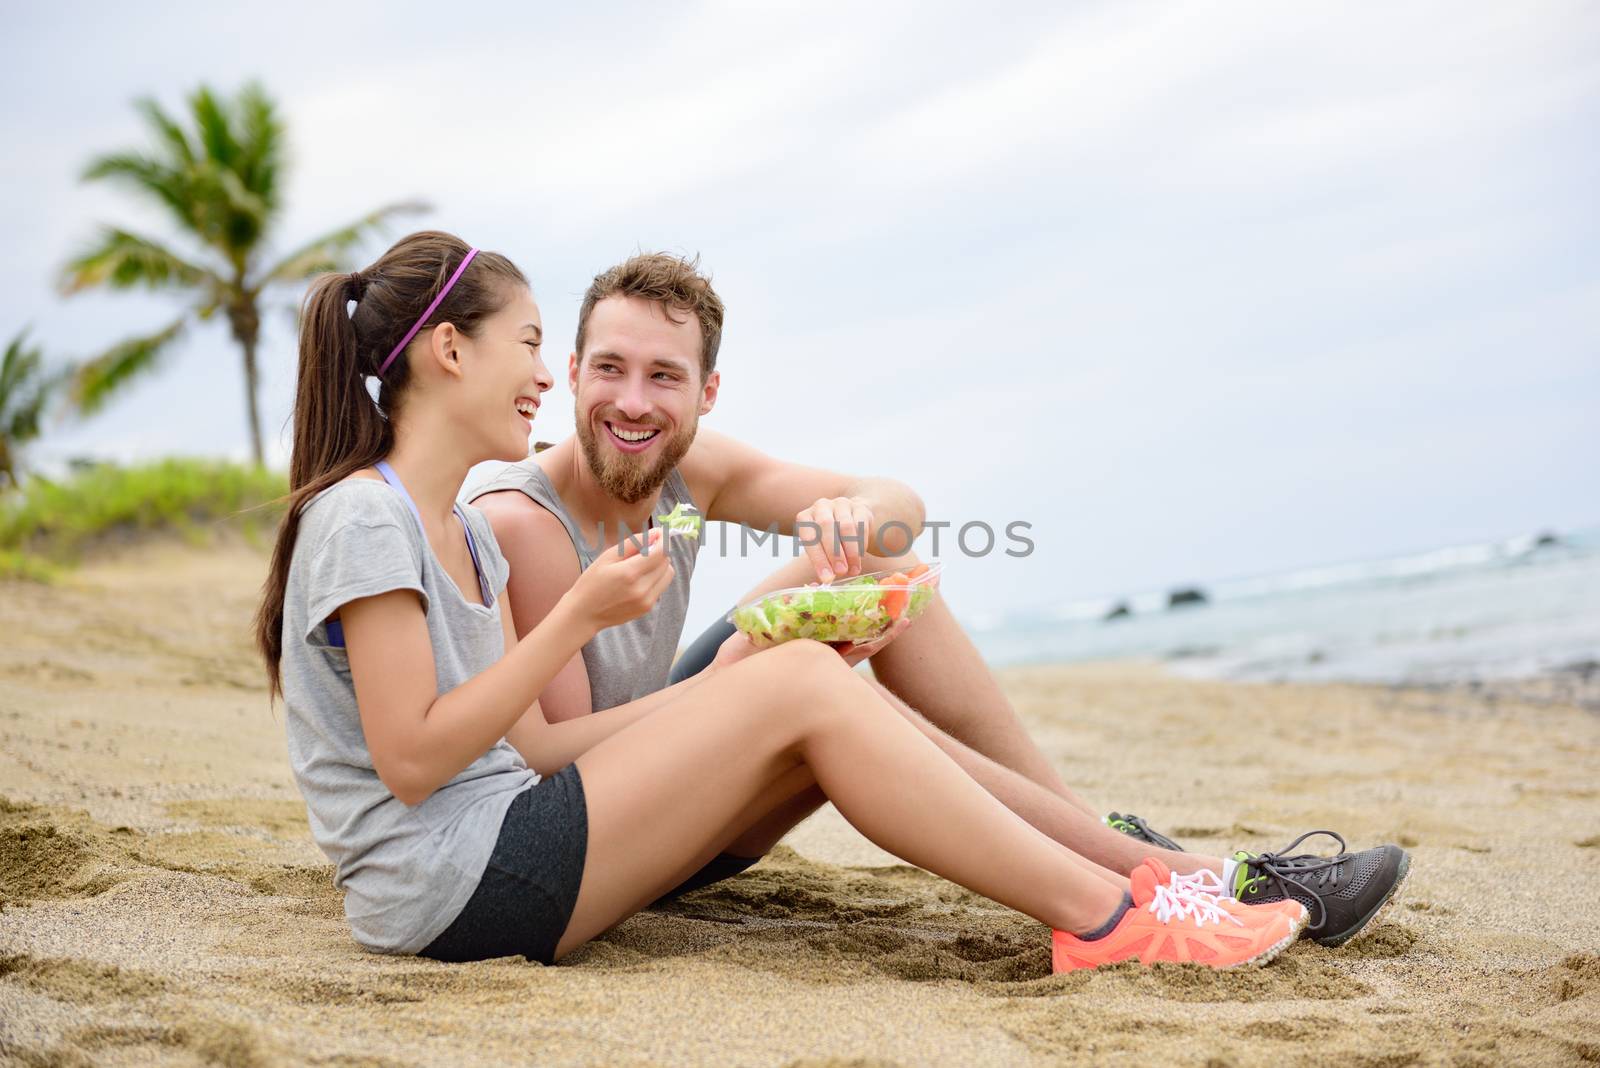 Salad - healthy fitness couple eating food by Maridav